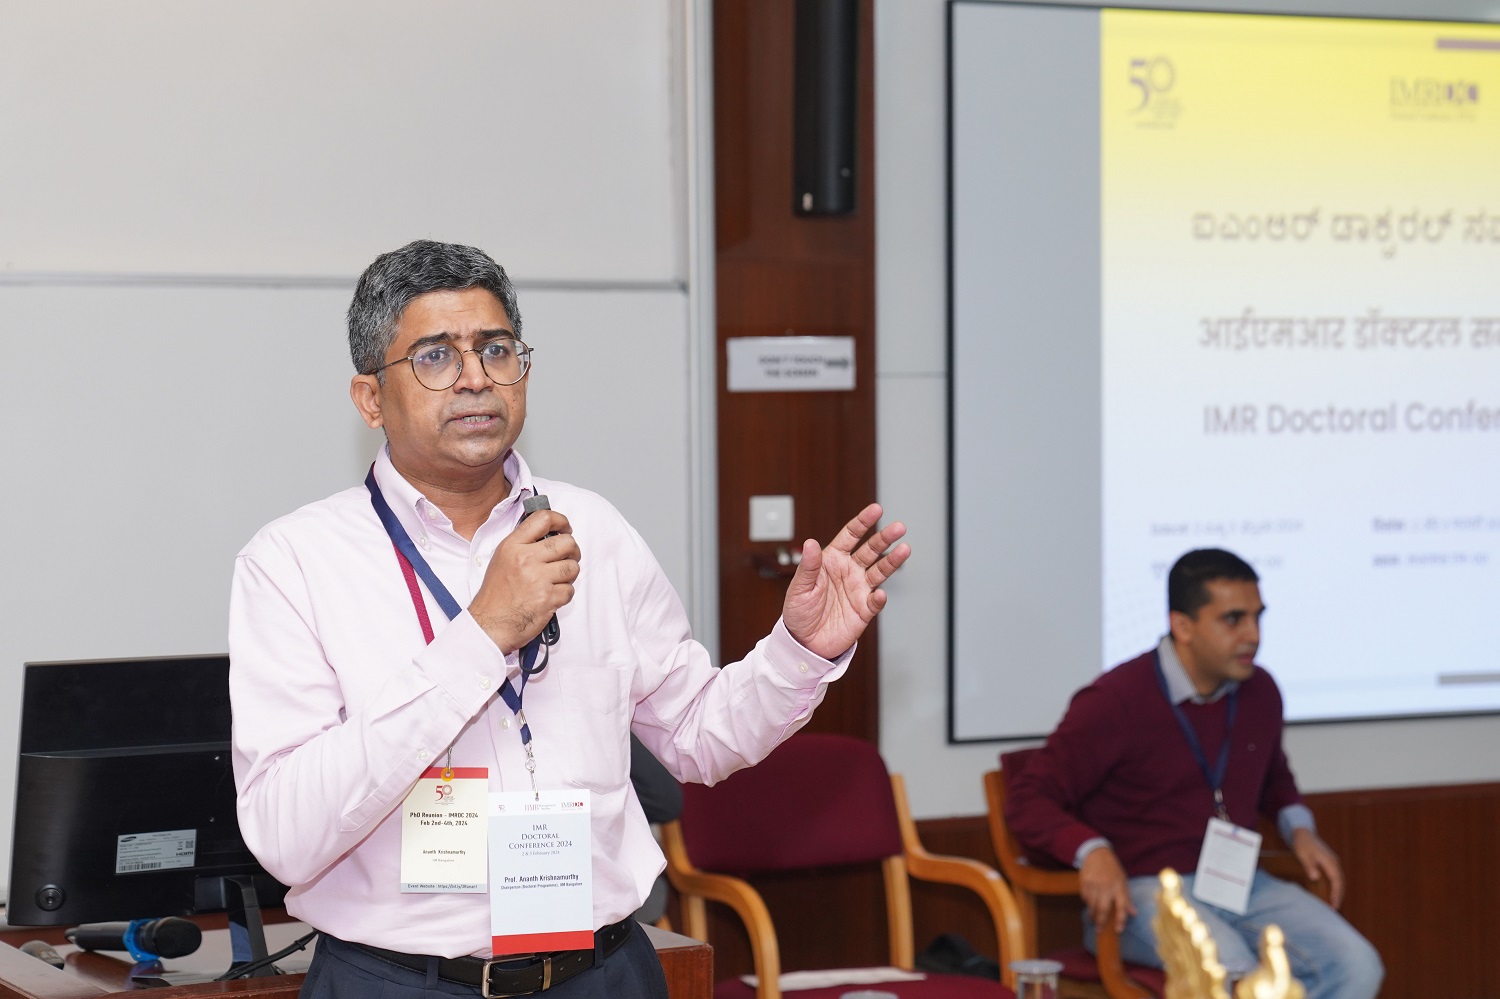 Professor Ananth Krishnamurthy, Chairperson, Doctoral Programme, IIMB, provides insights on IIMB’s doctoral programme, IMR and the context of the conference.